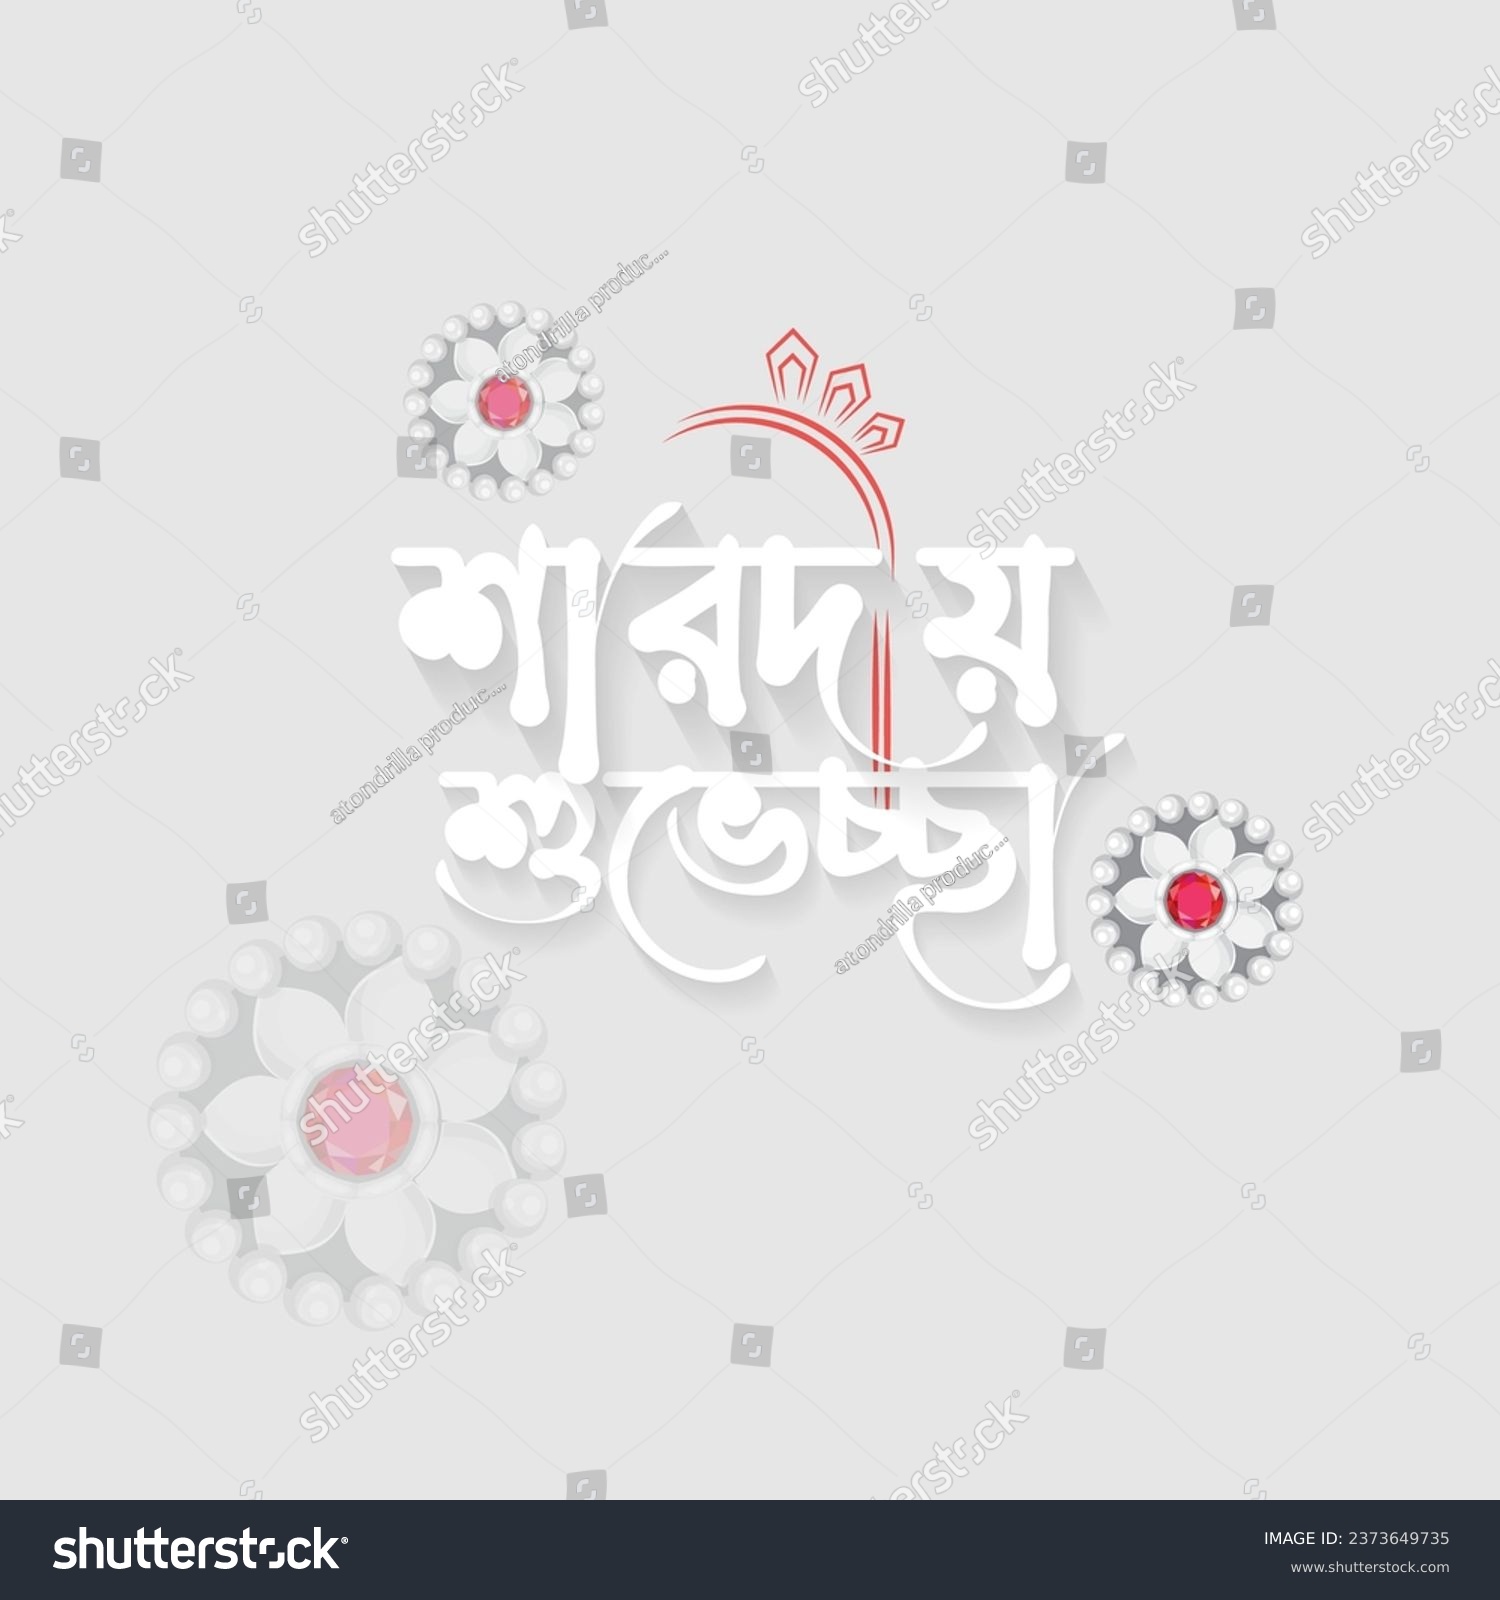 SVG of Bangla typography of Hindu festival Durga puja 